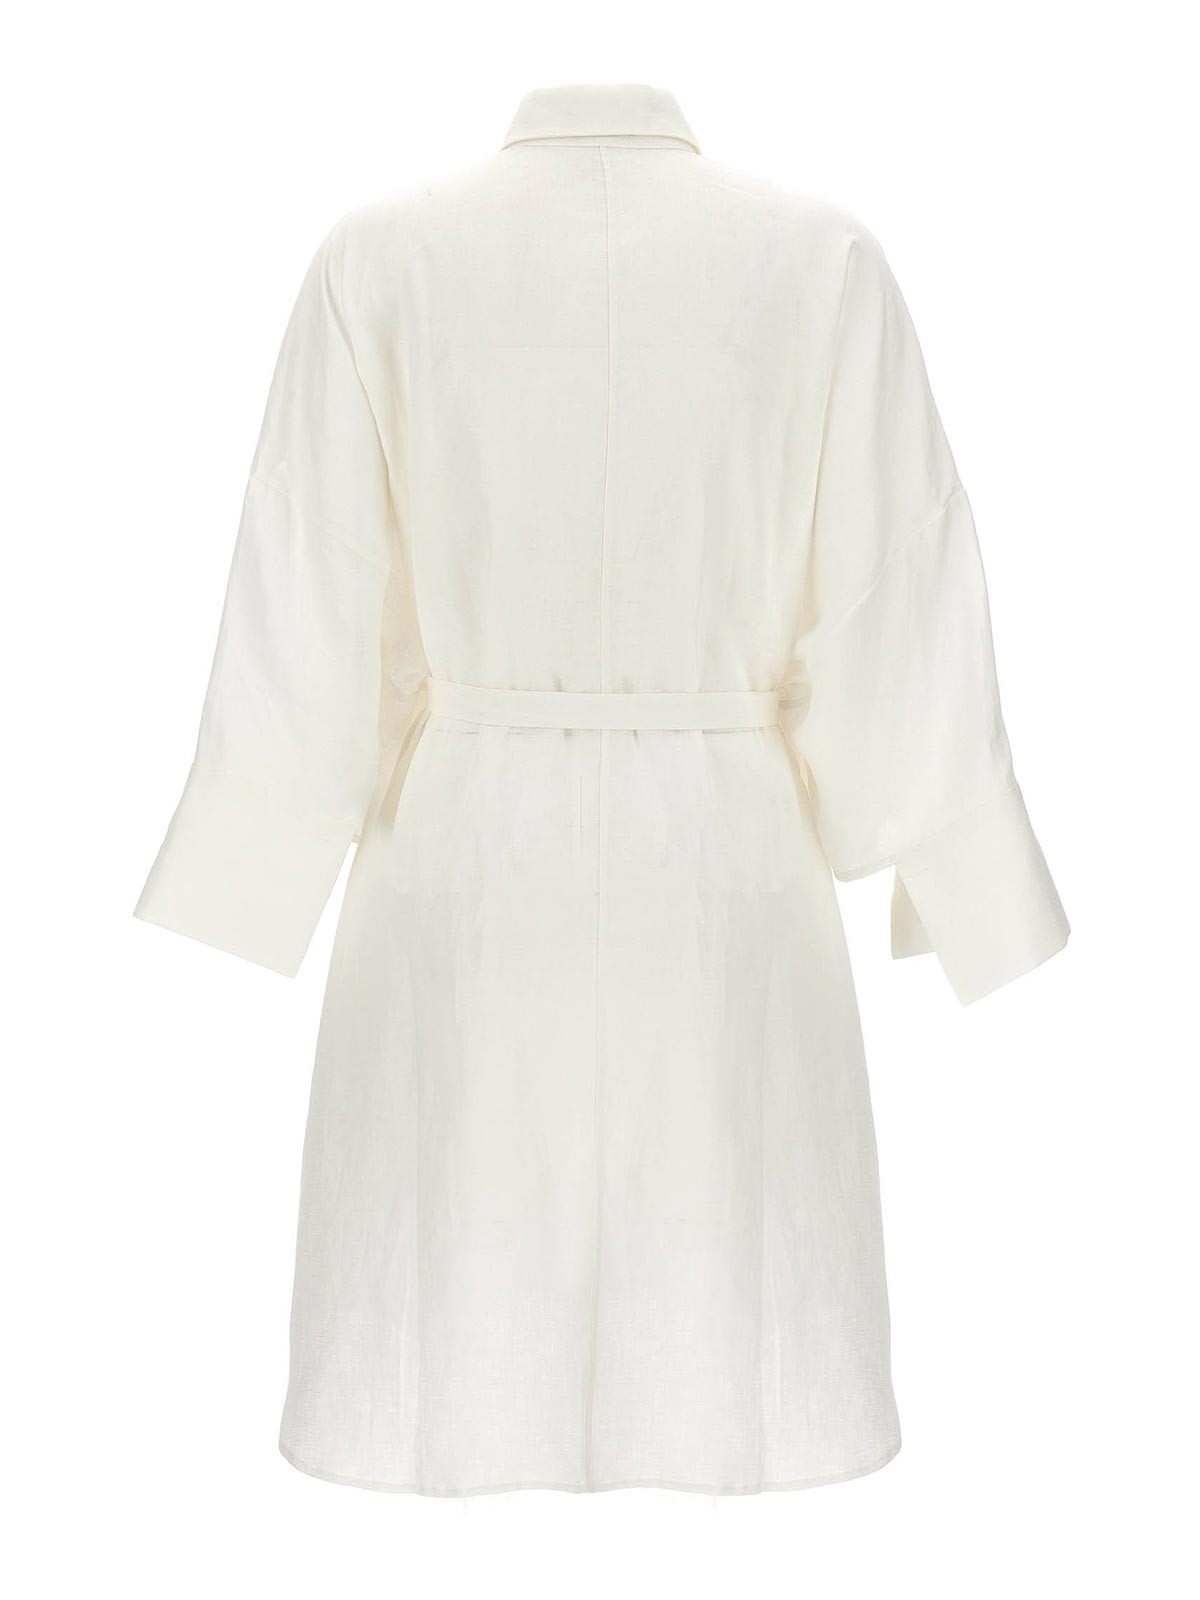 Shop Balossa Honami Shirt Dress In White